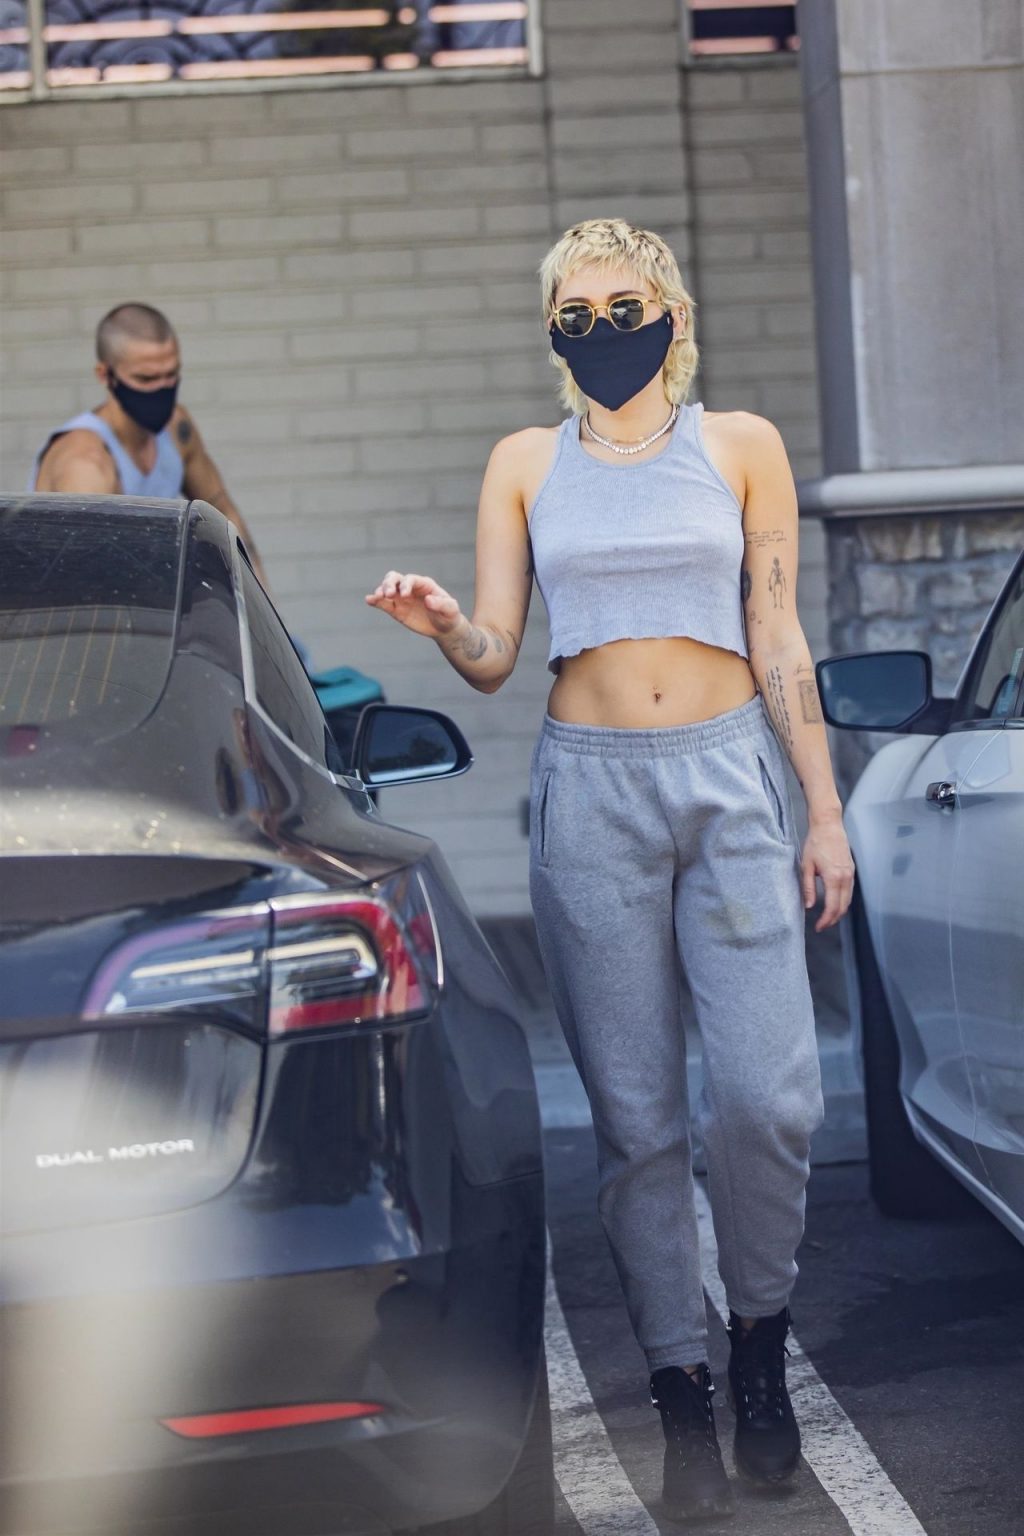 sport shopping photos Miley Cyrus Instagram celebrity braless bra 